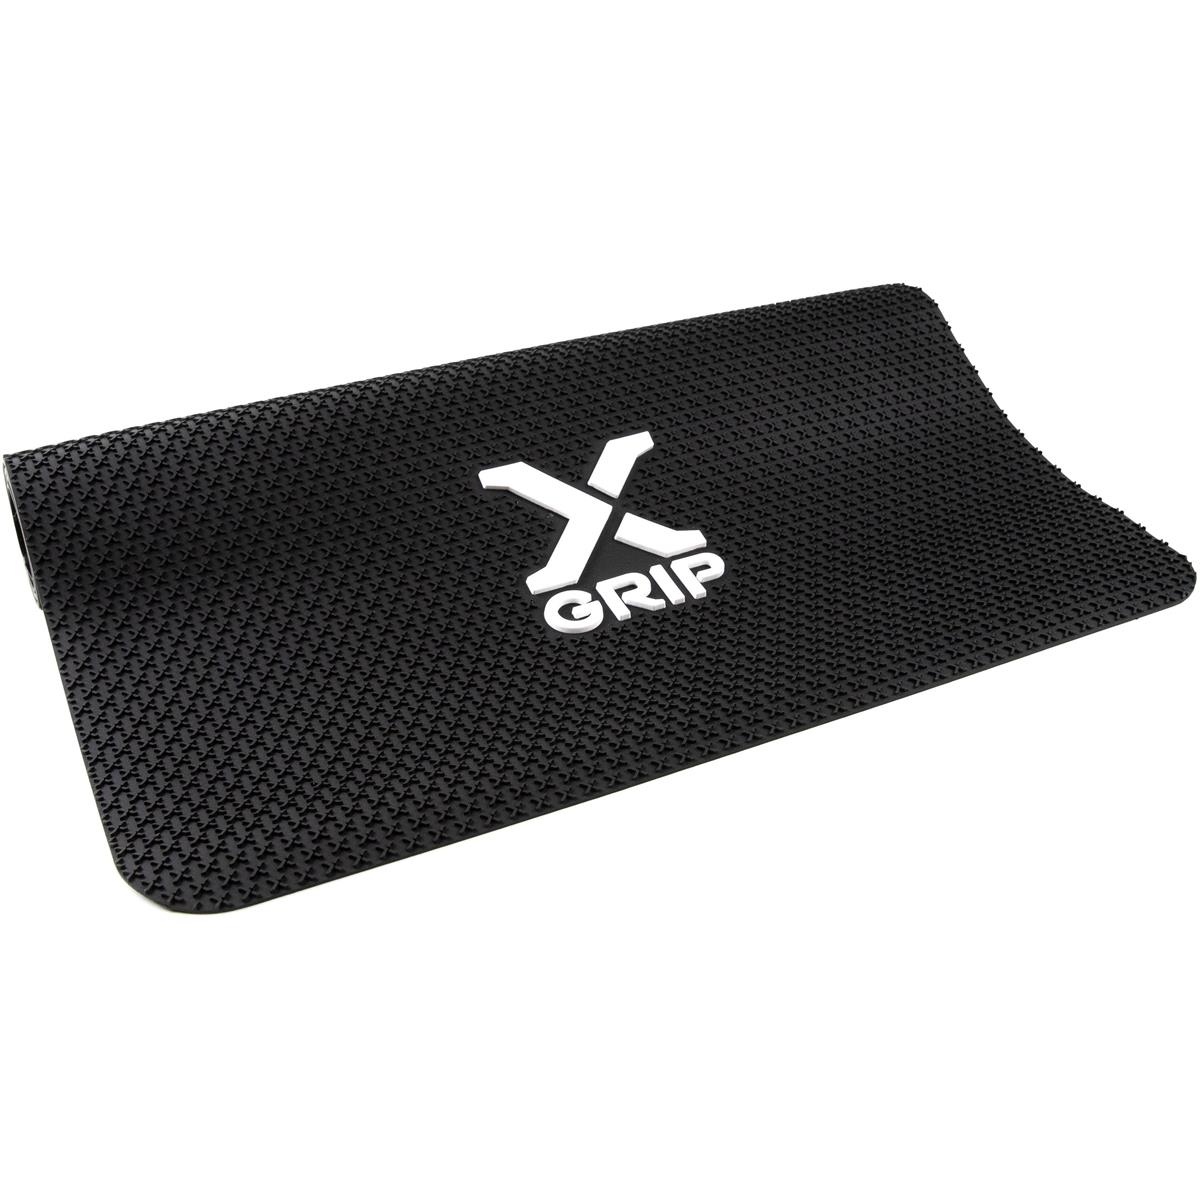 X-Grip Seat Cover NO Slip Universal, Black